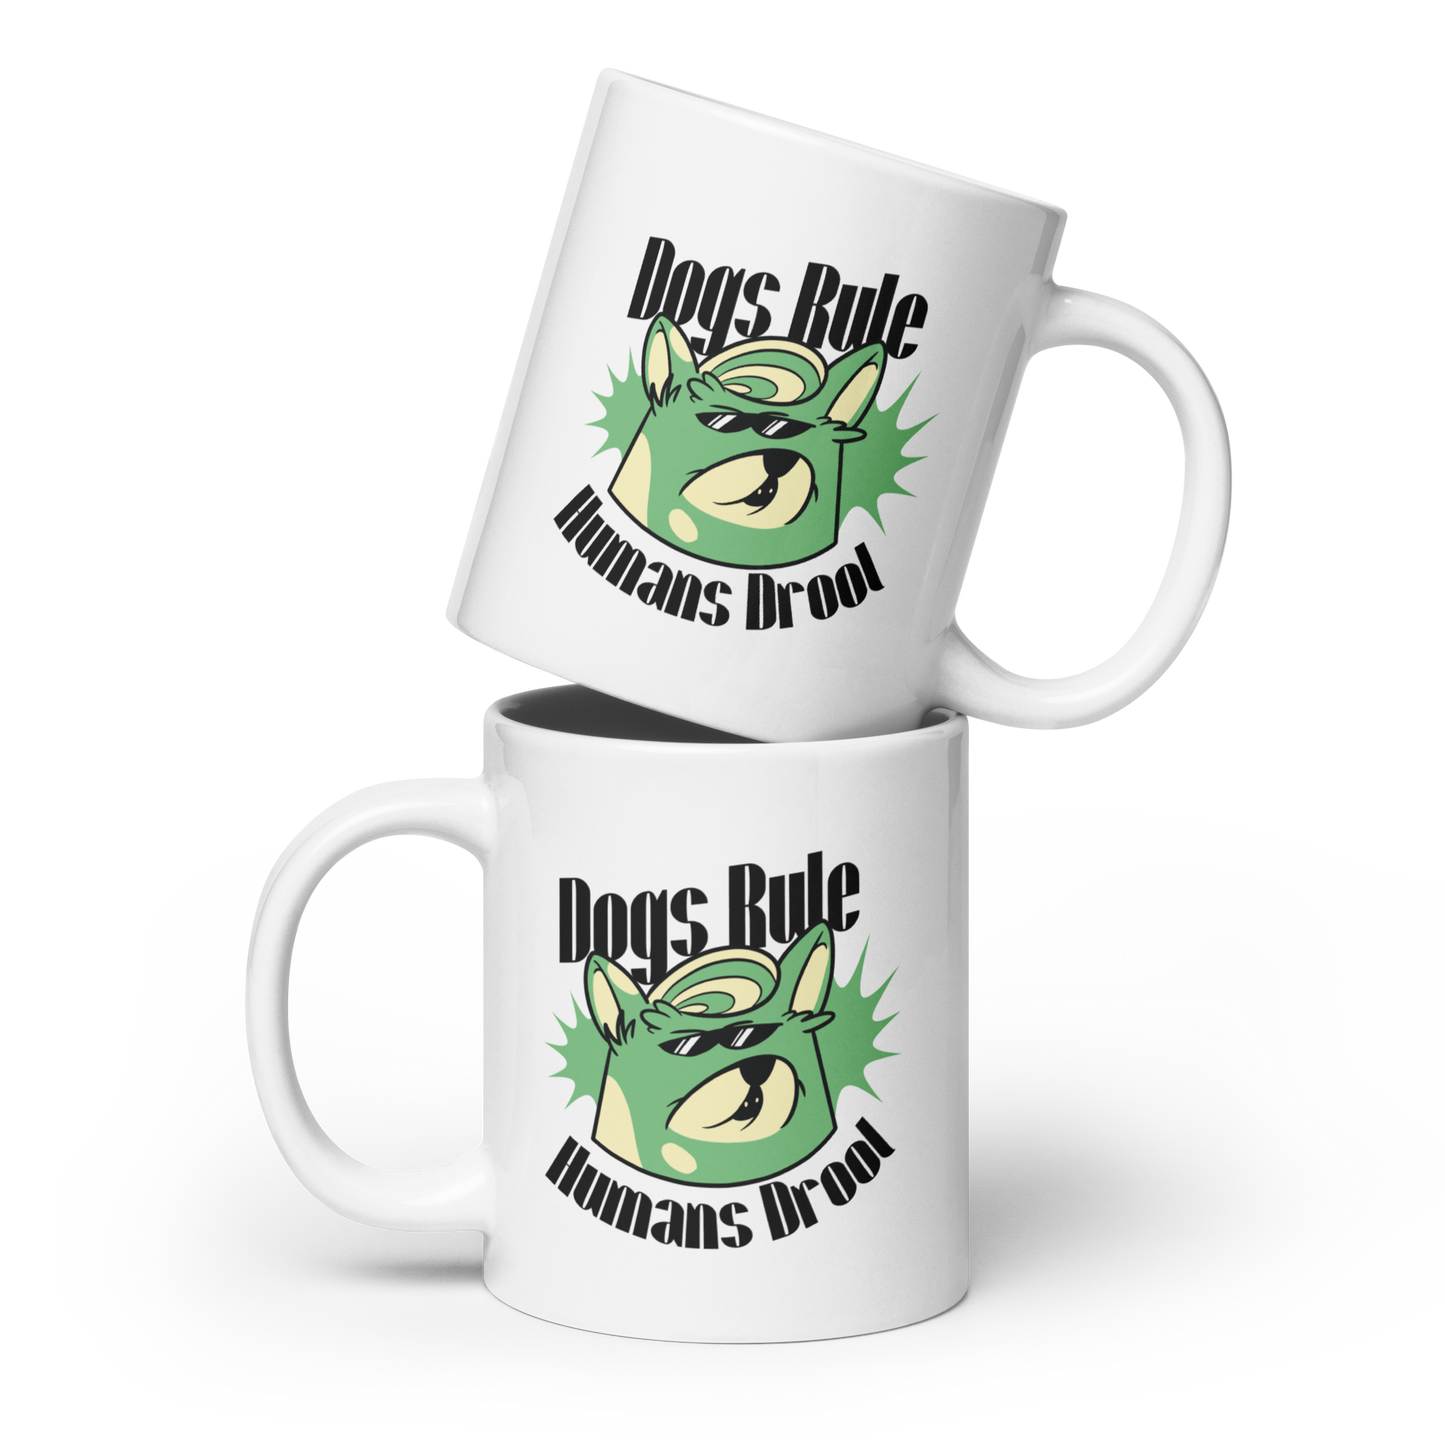 Dogs rule | White glossy mug